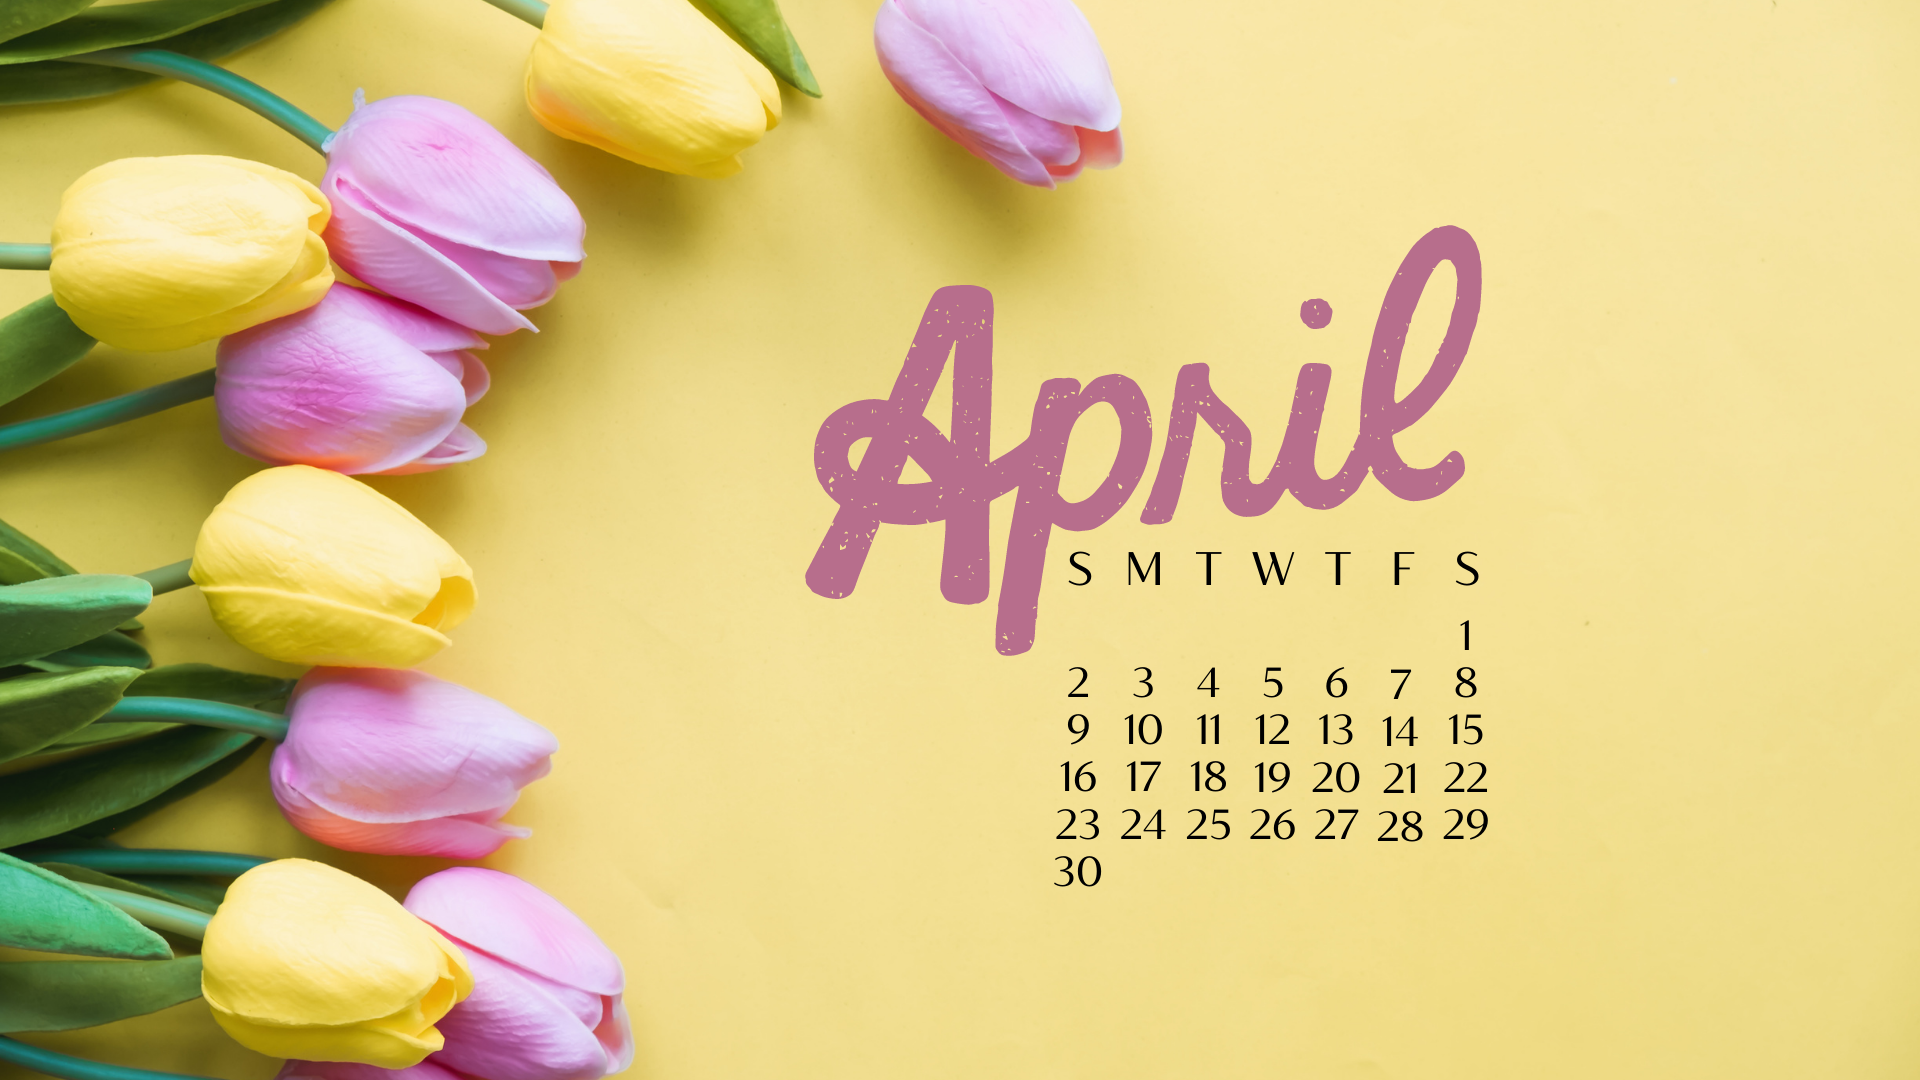 April Desktop Calendar